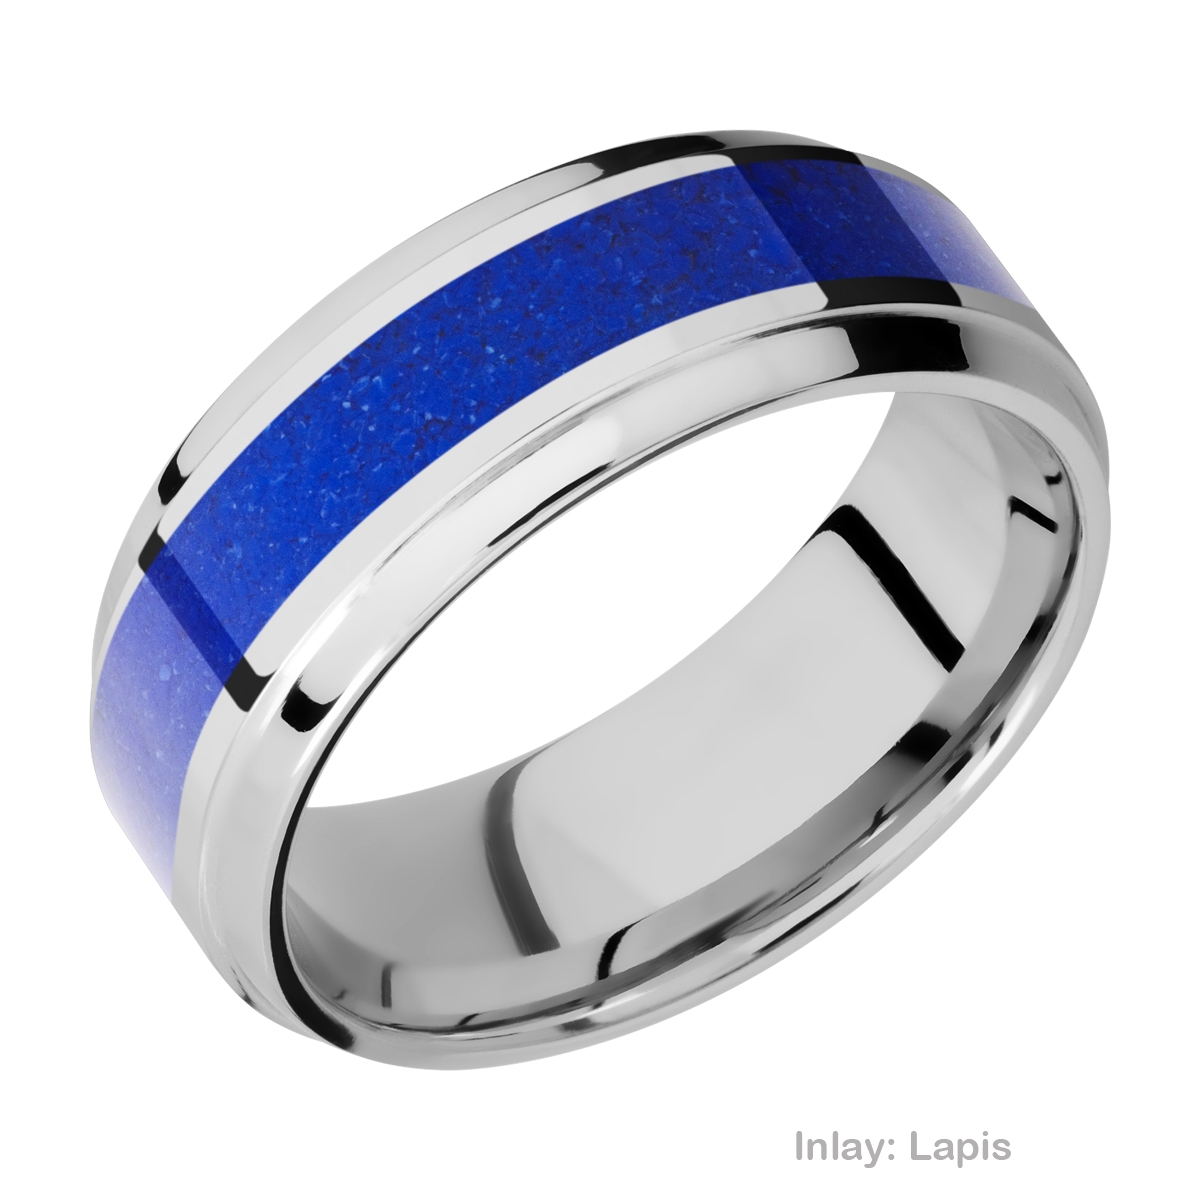 Lashbrook CC8B14(S)/MOSAIC Cobalt Chrome Wedding Ring or Band